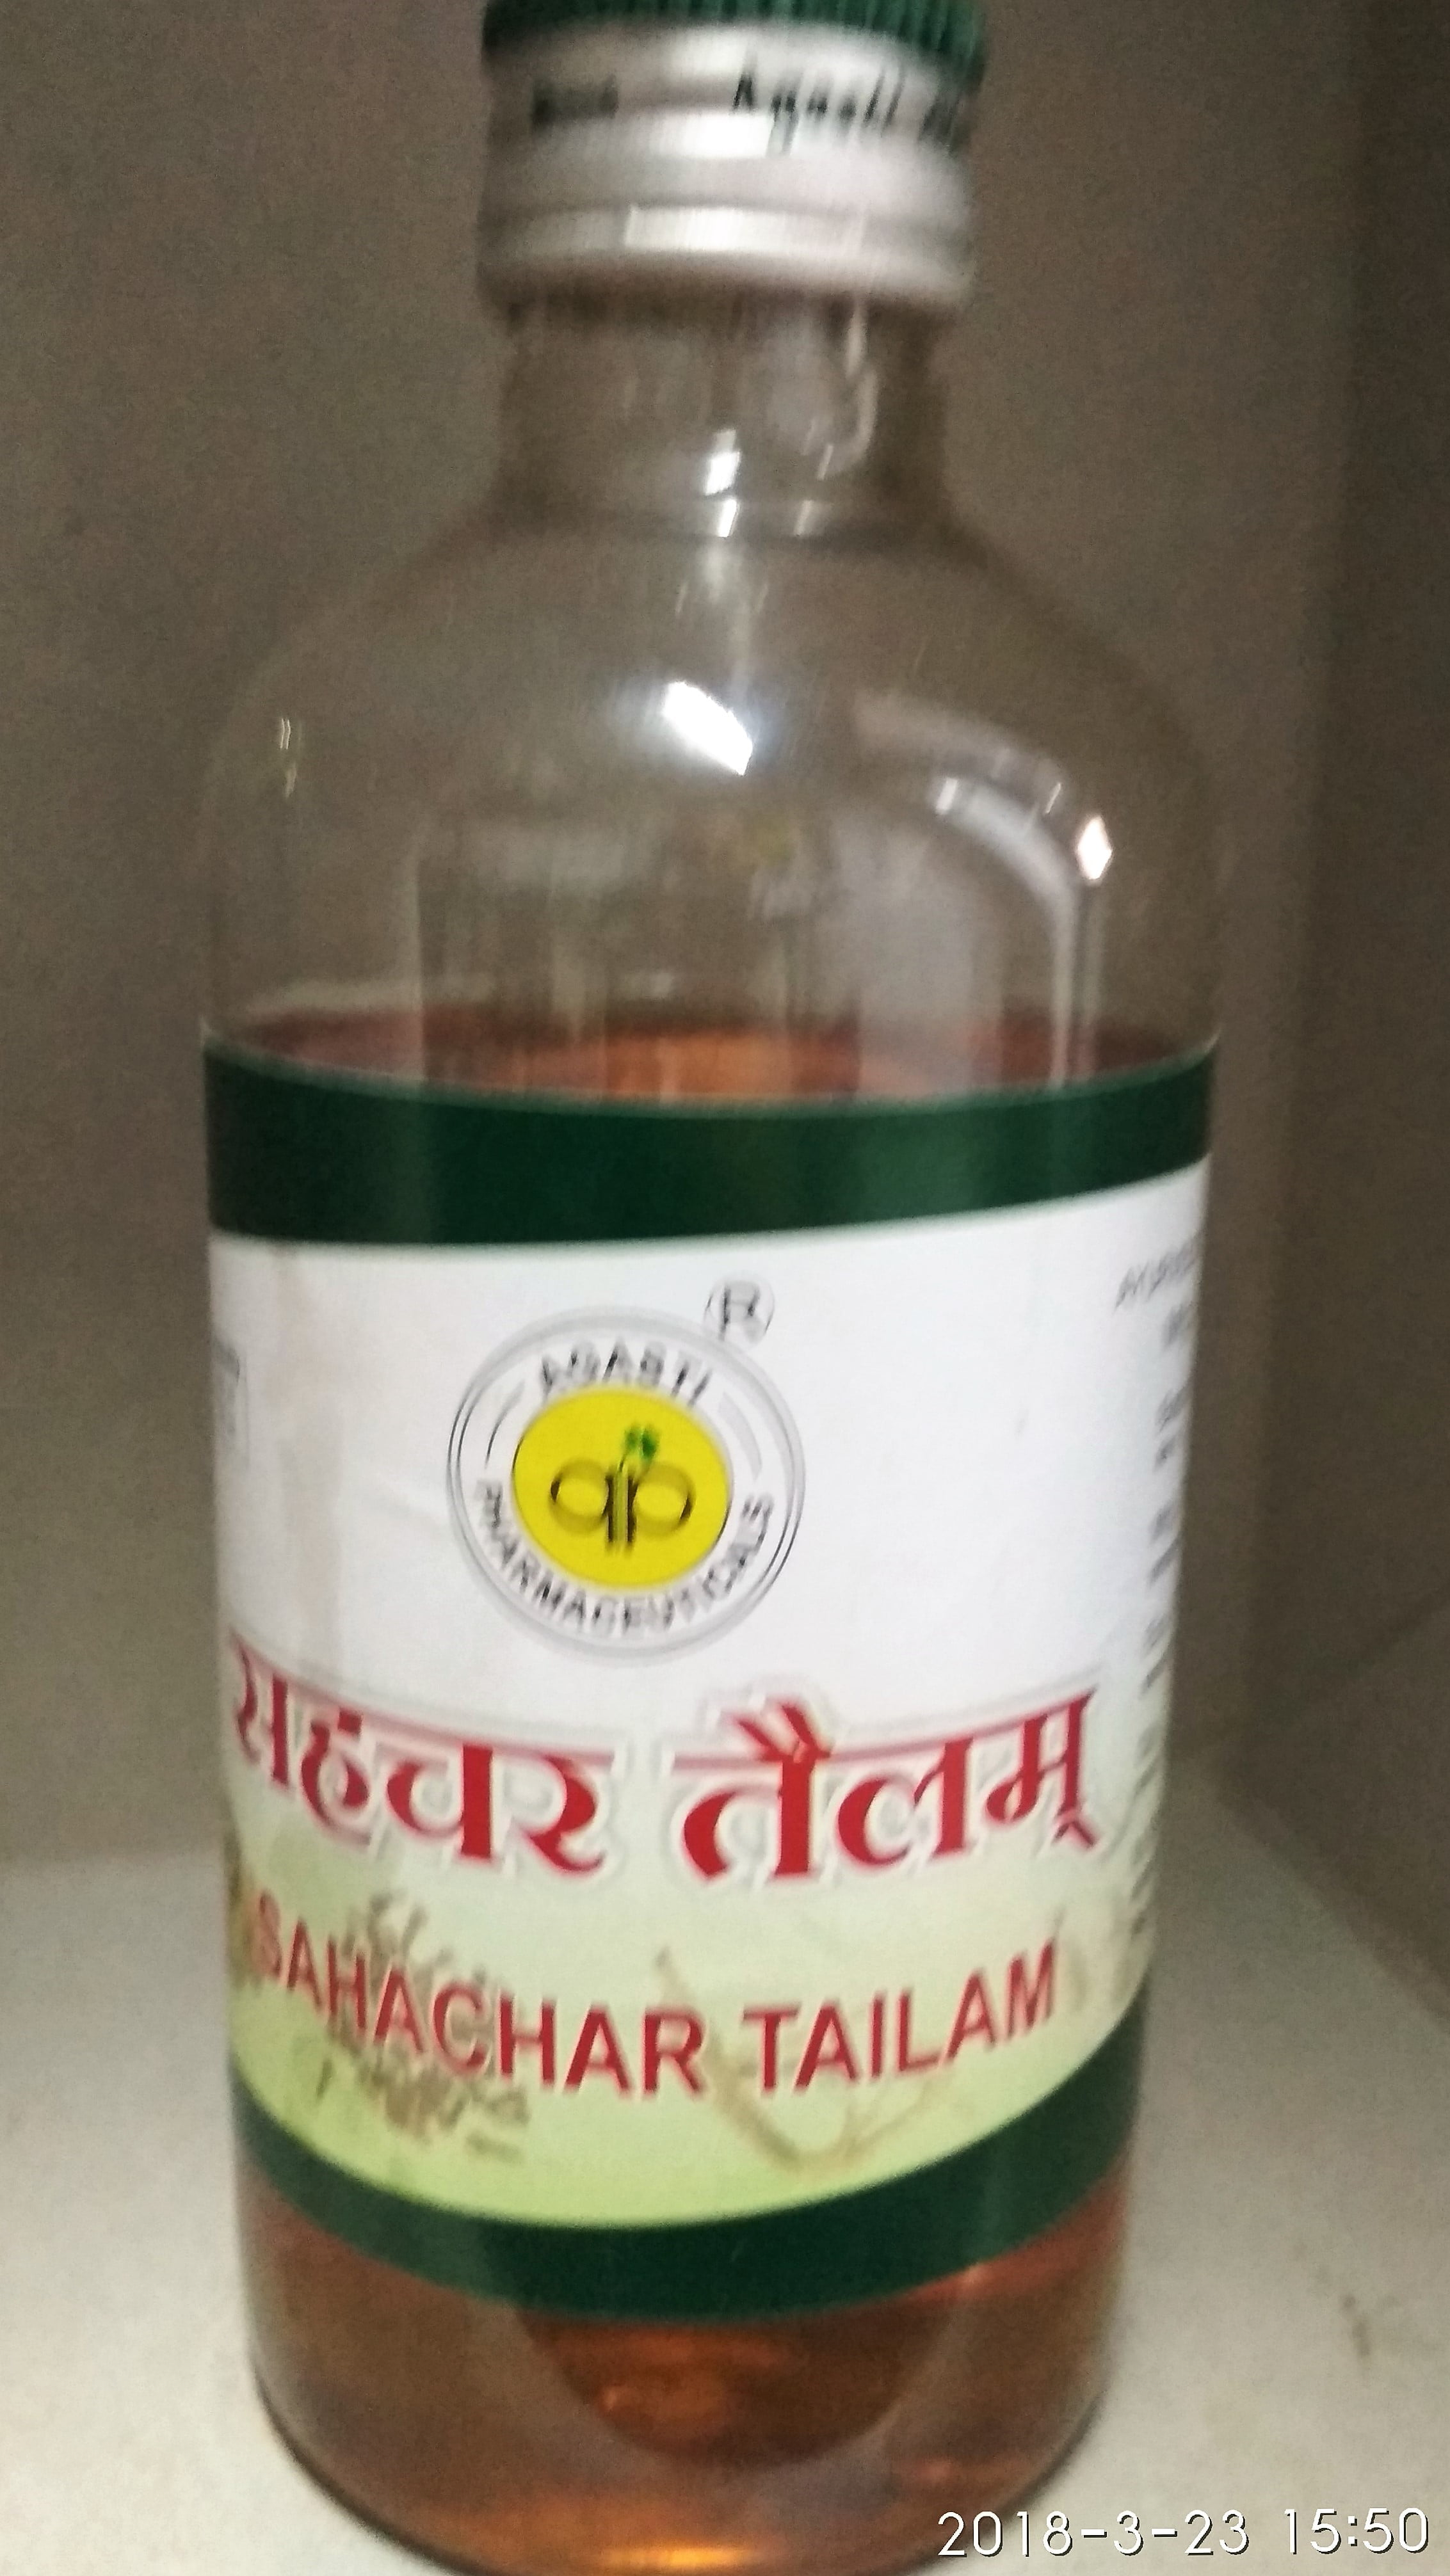 sahachar tailam plain 450 ml upto 15% off agasti pharmaceuticals